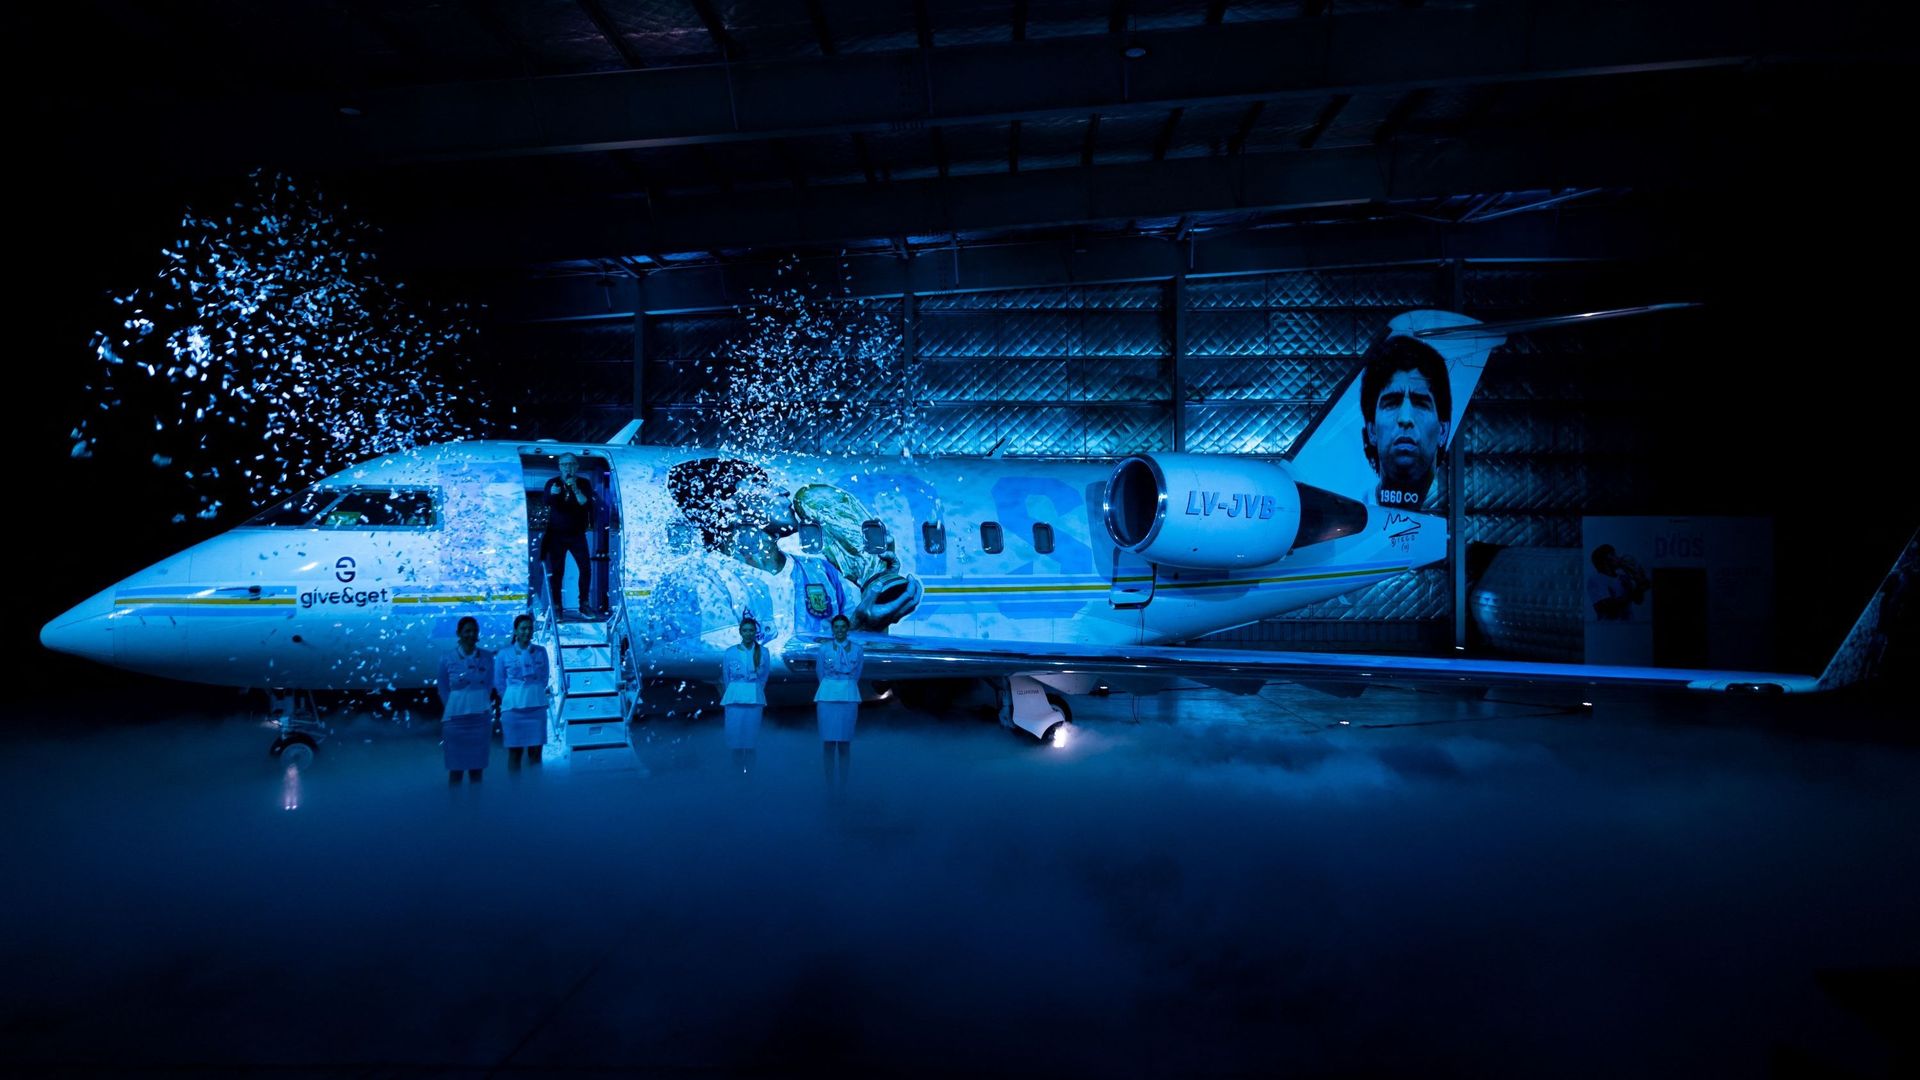 Le Tango D10S, l'avion en hommage à Diego Maradona